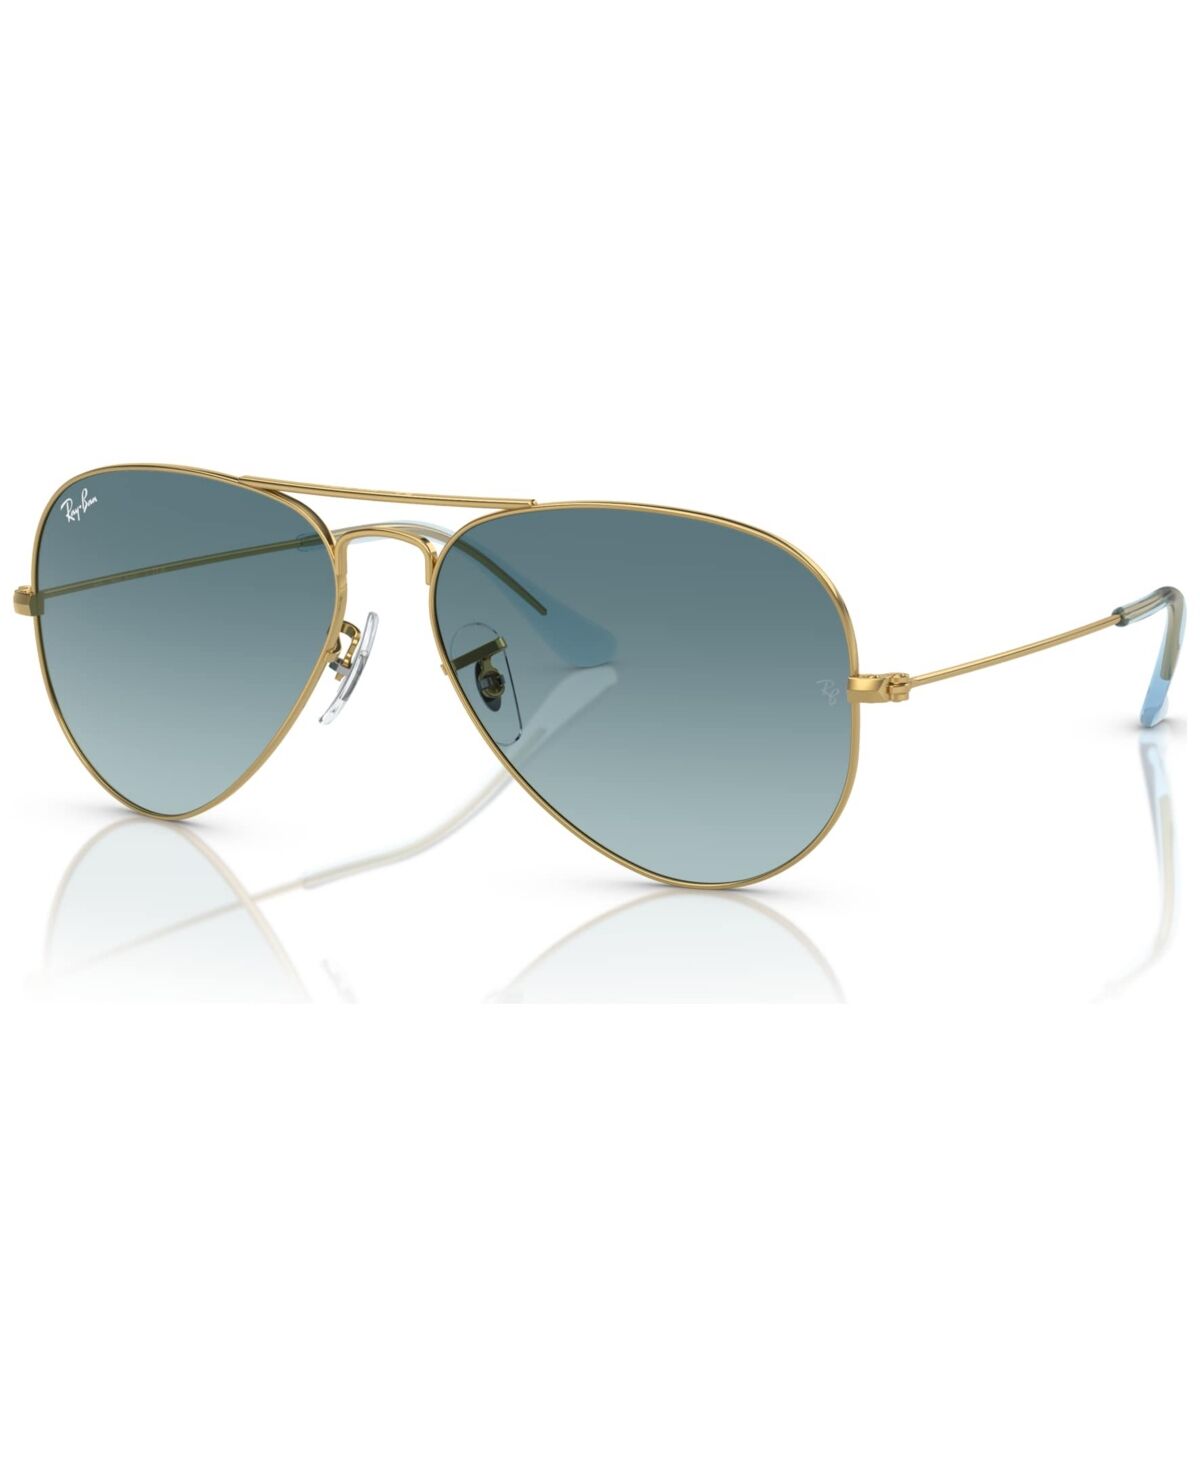 Ray-Ban Unisex Sunglasses, RB3025 Aviator Gradient - Gold-Tone/Blue